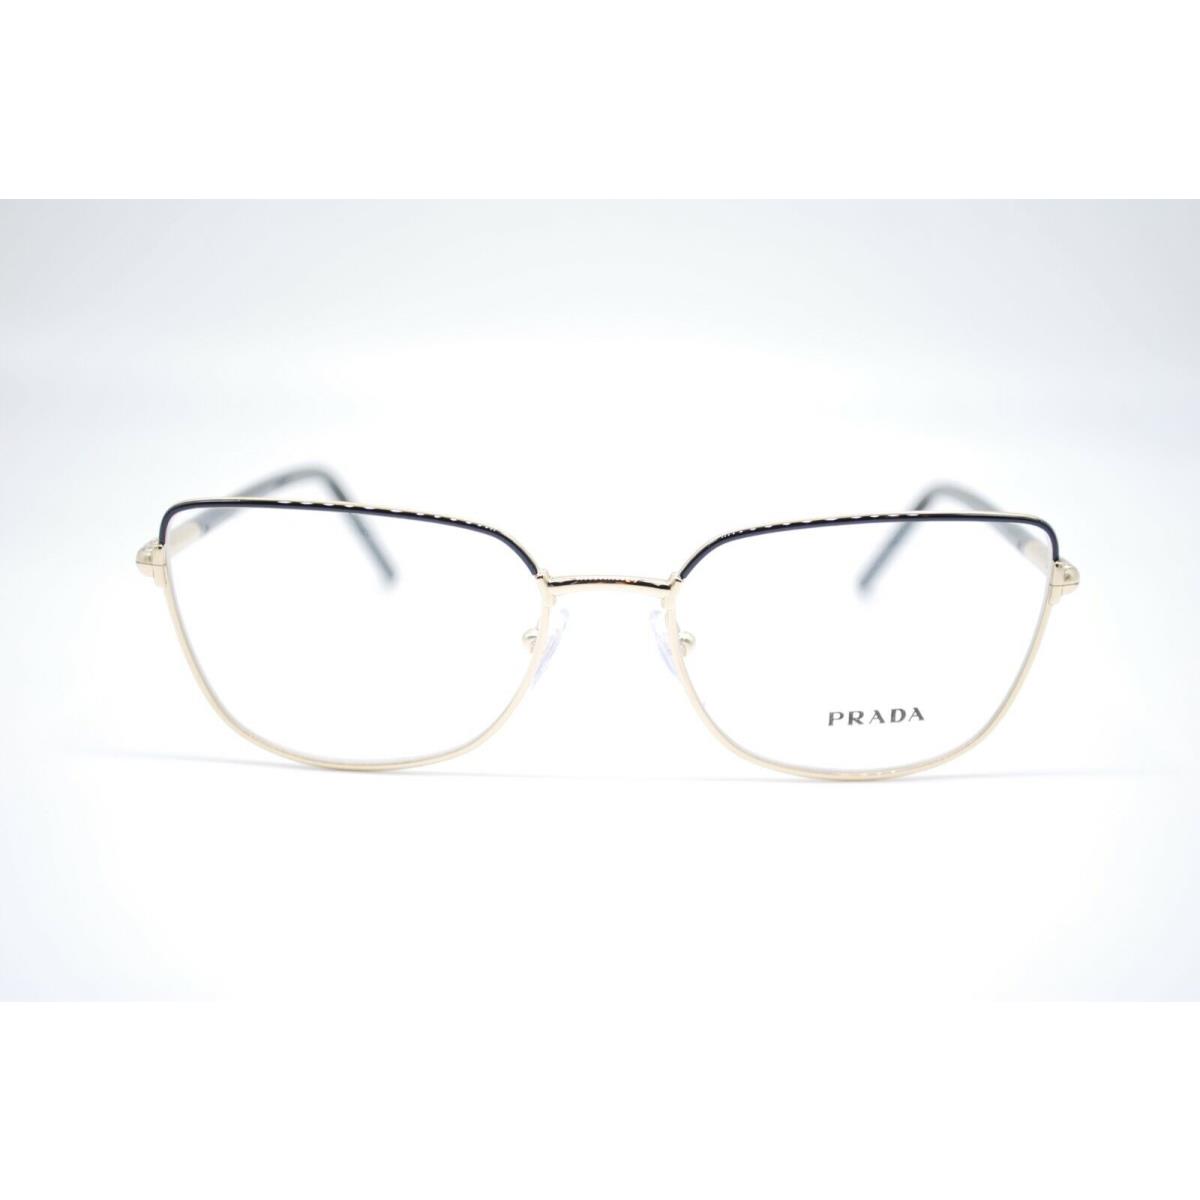 Prada eyeglasses VPR - Black Frame 1